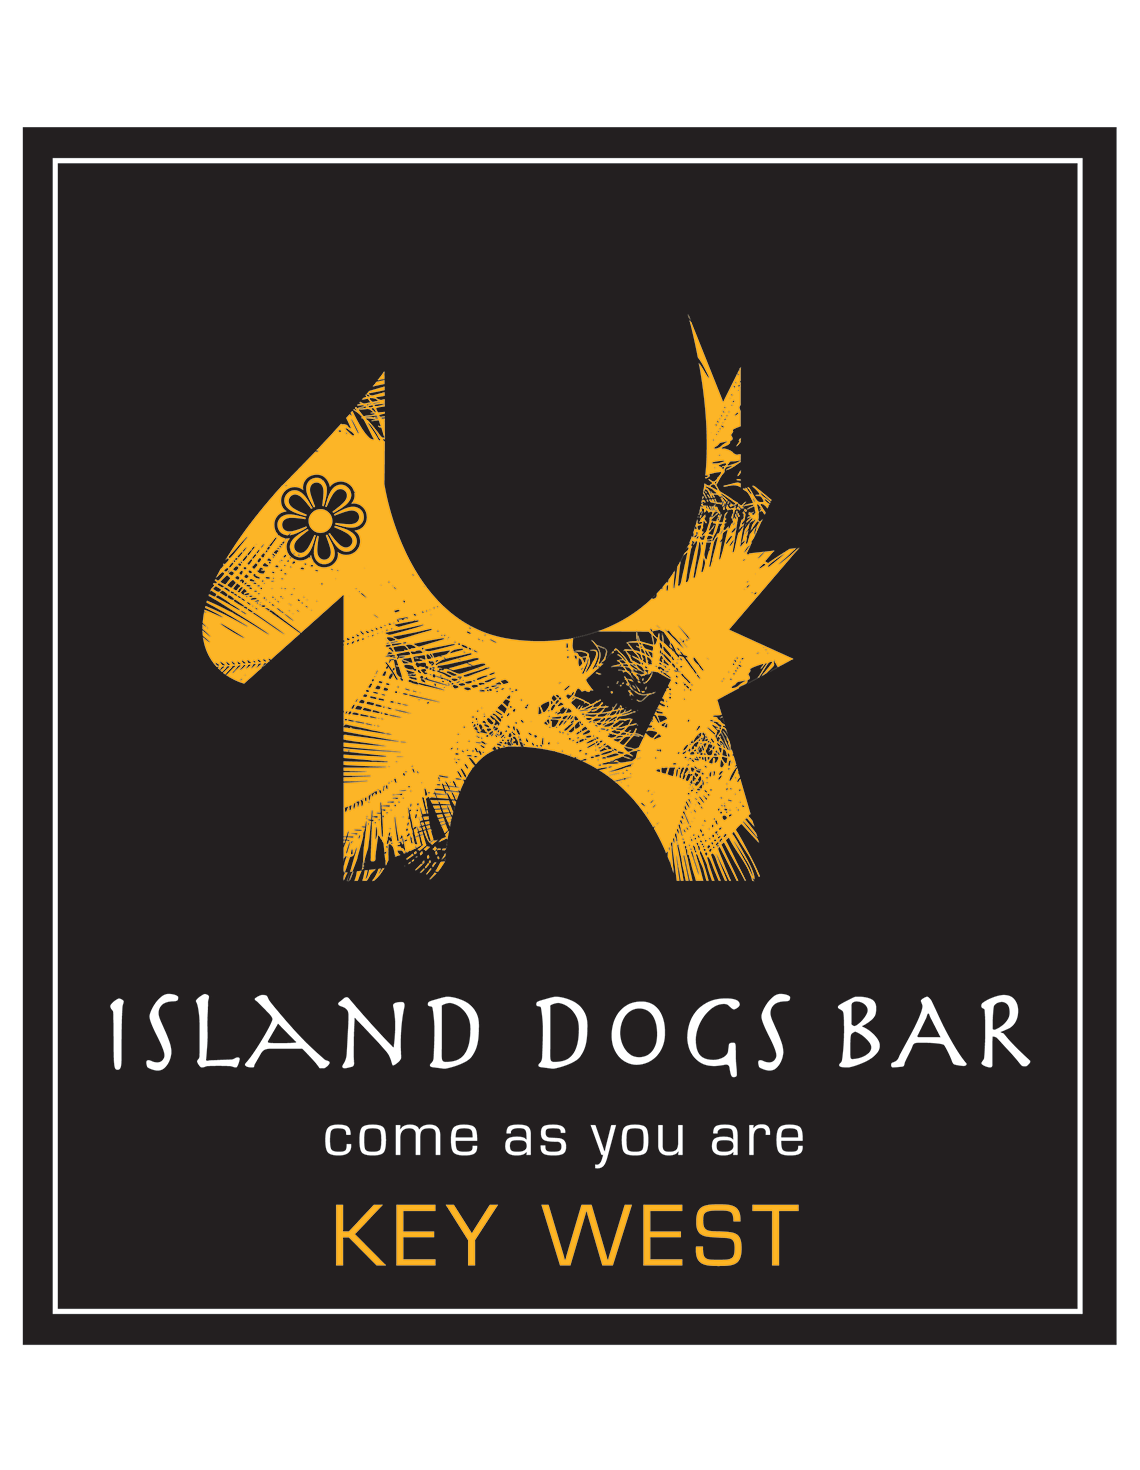 Island Dogs logo